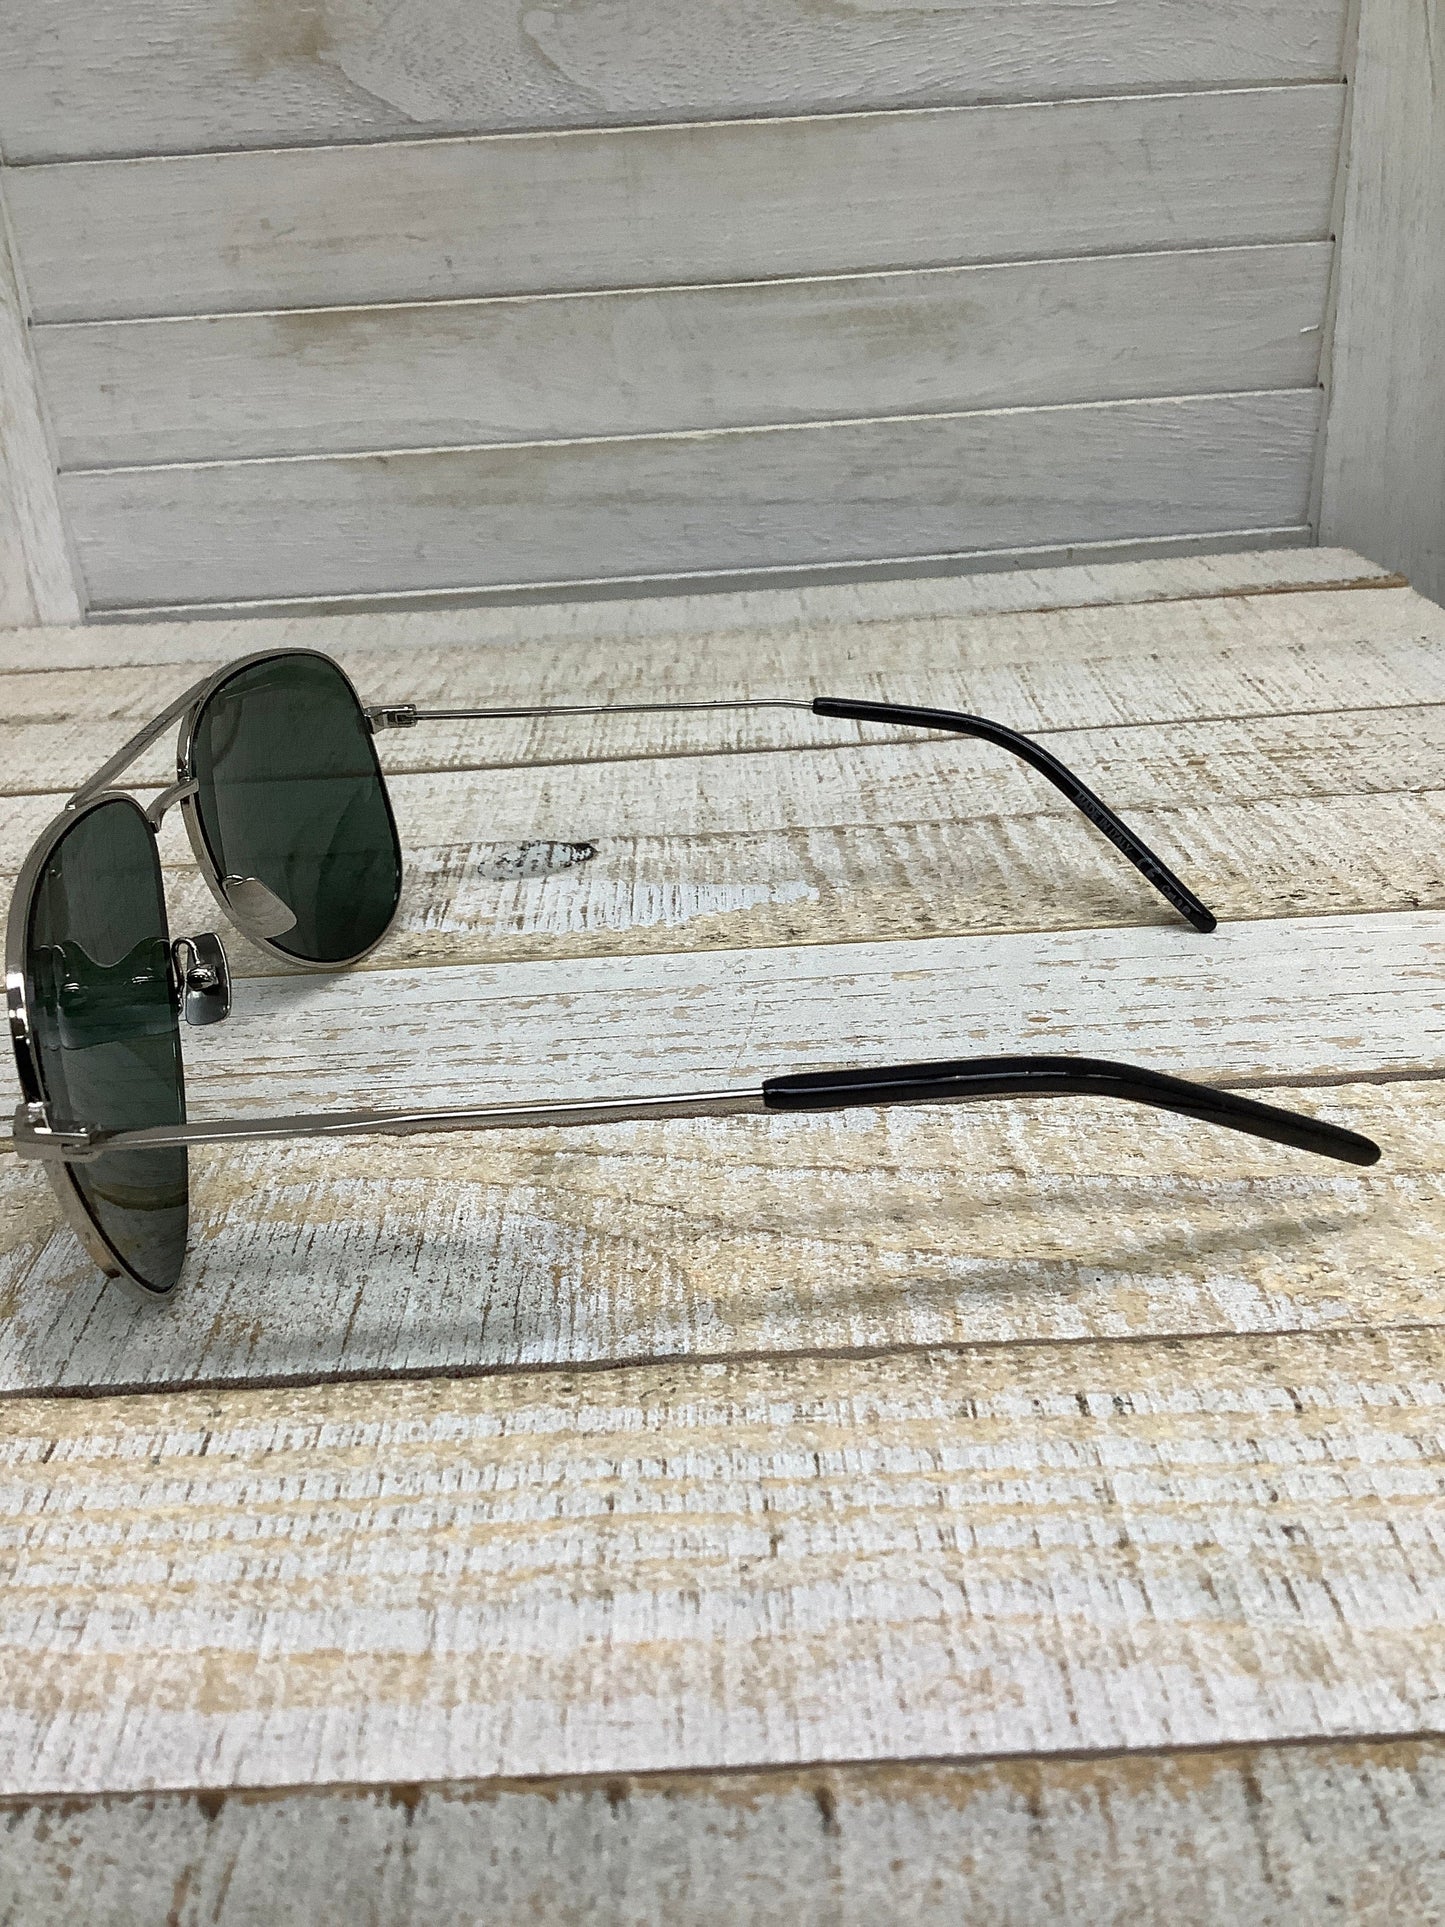 Sunglasses Luxury Designer Yves Saint Laurent